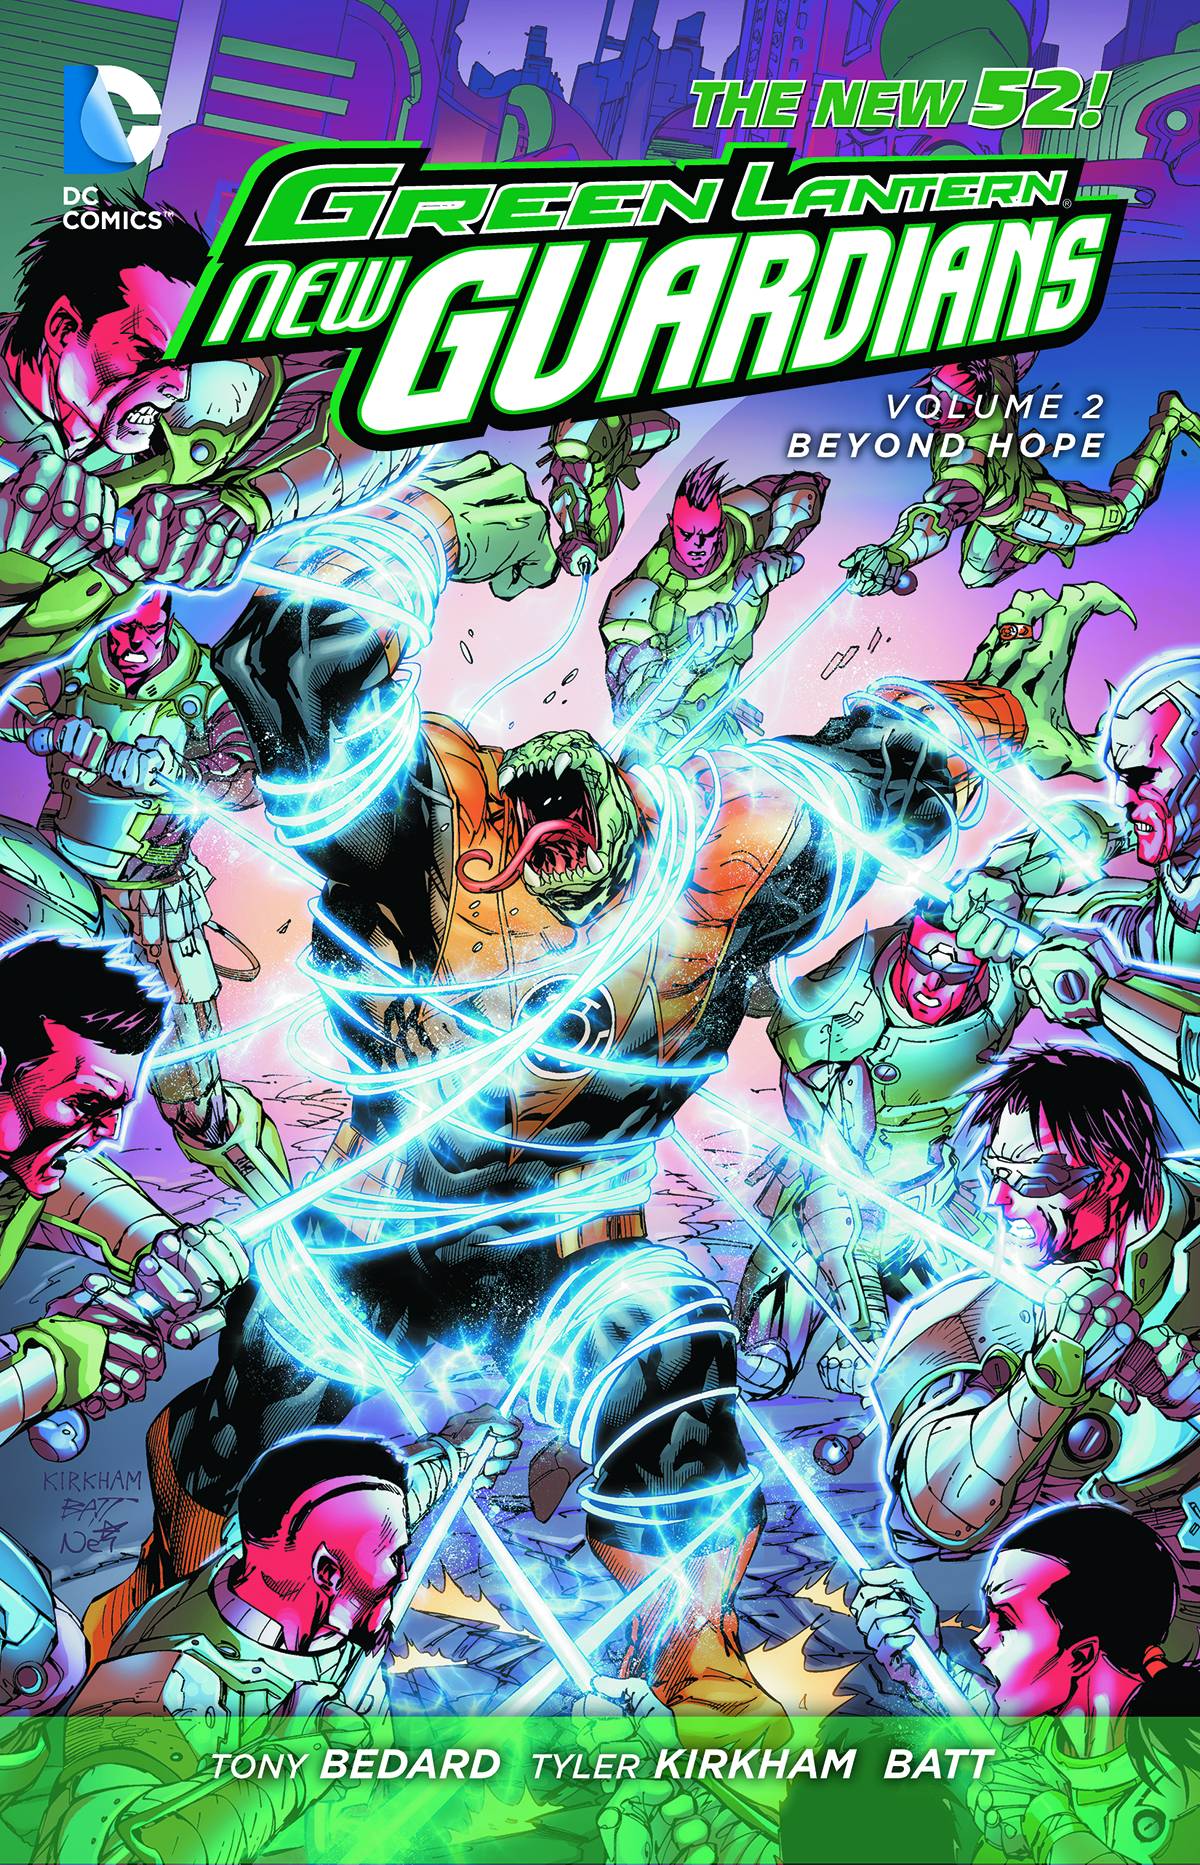 Green Lantern New Guardians Hardcover Volume 2 Beyond Hope (New 52)